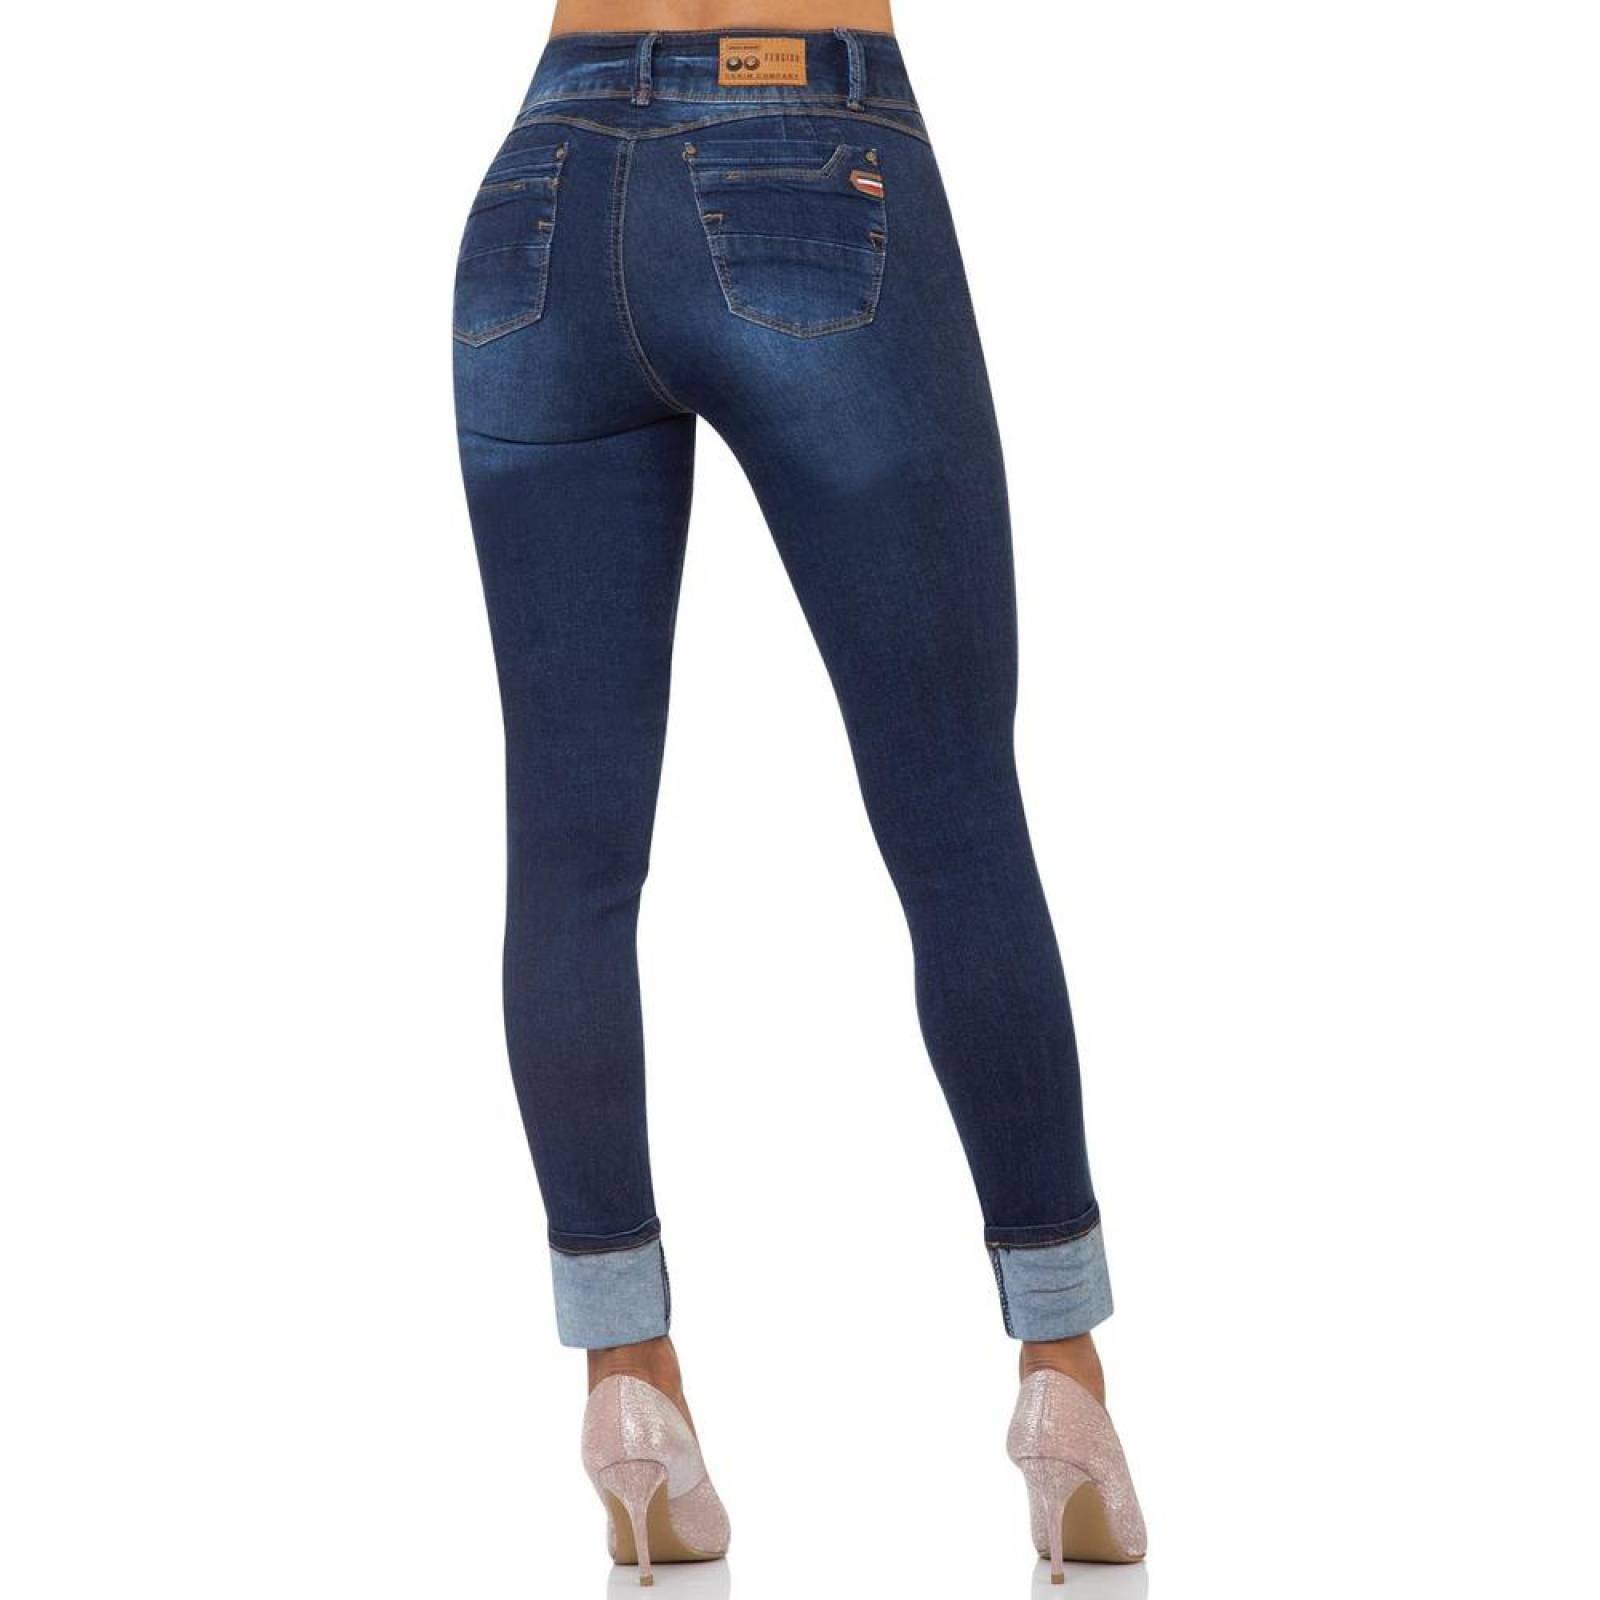 Jeans Moda Mujer Fergino Indigo 52903209 Mezclilla Stretch 